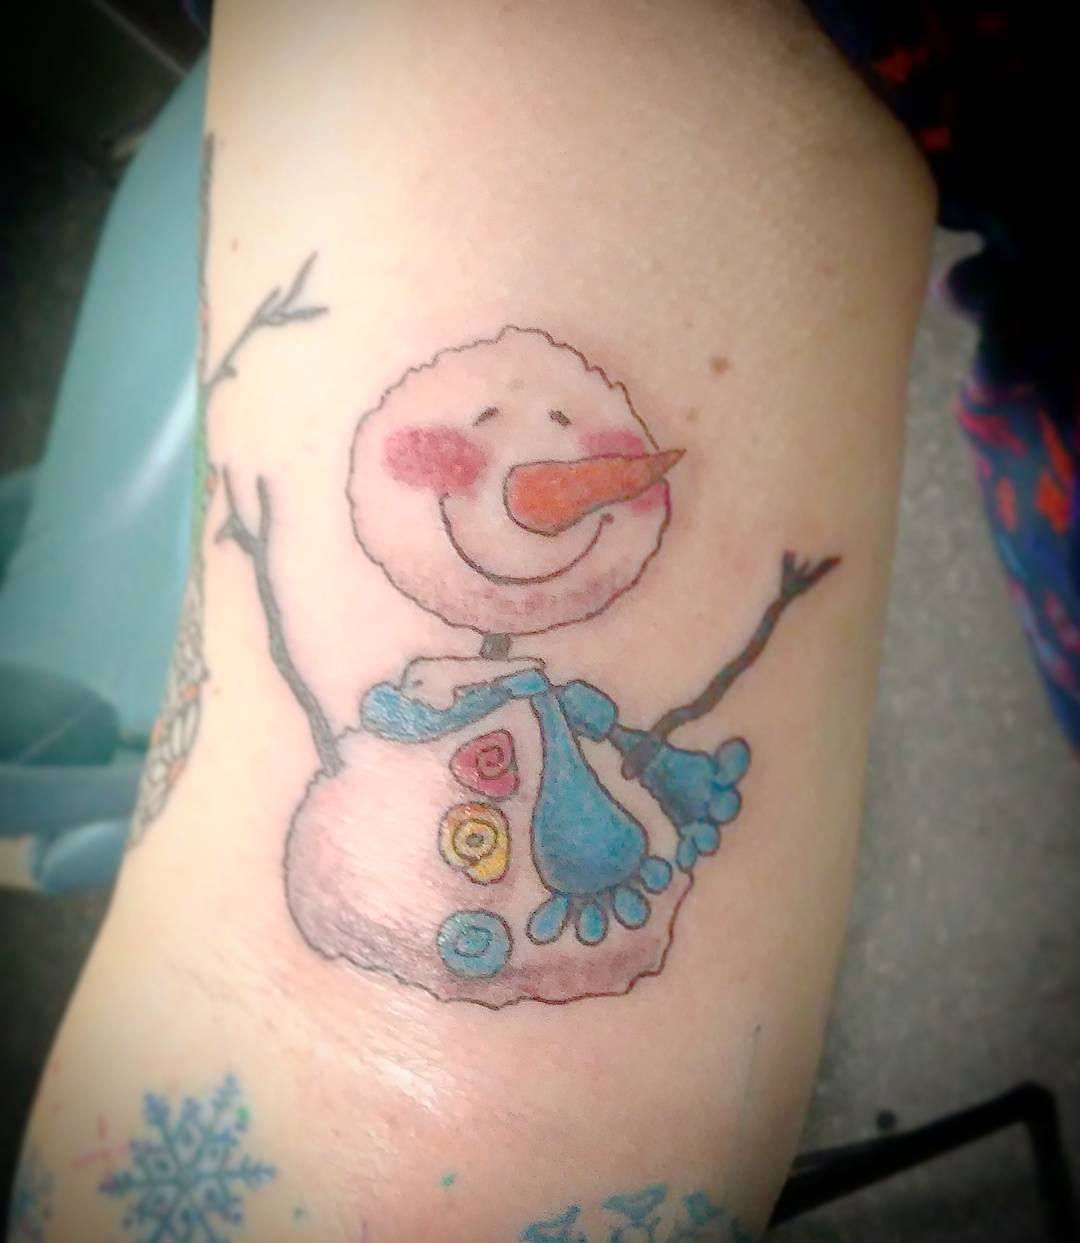 Sweet snowman half sleeve tattoo.